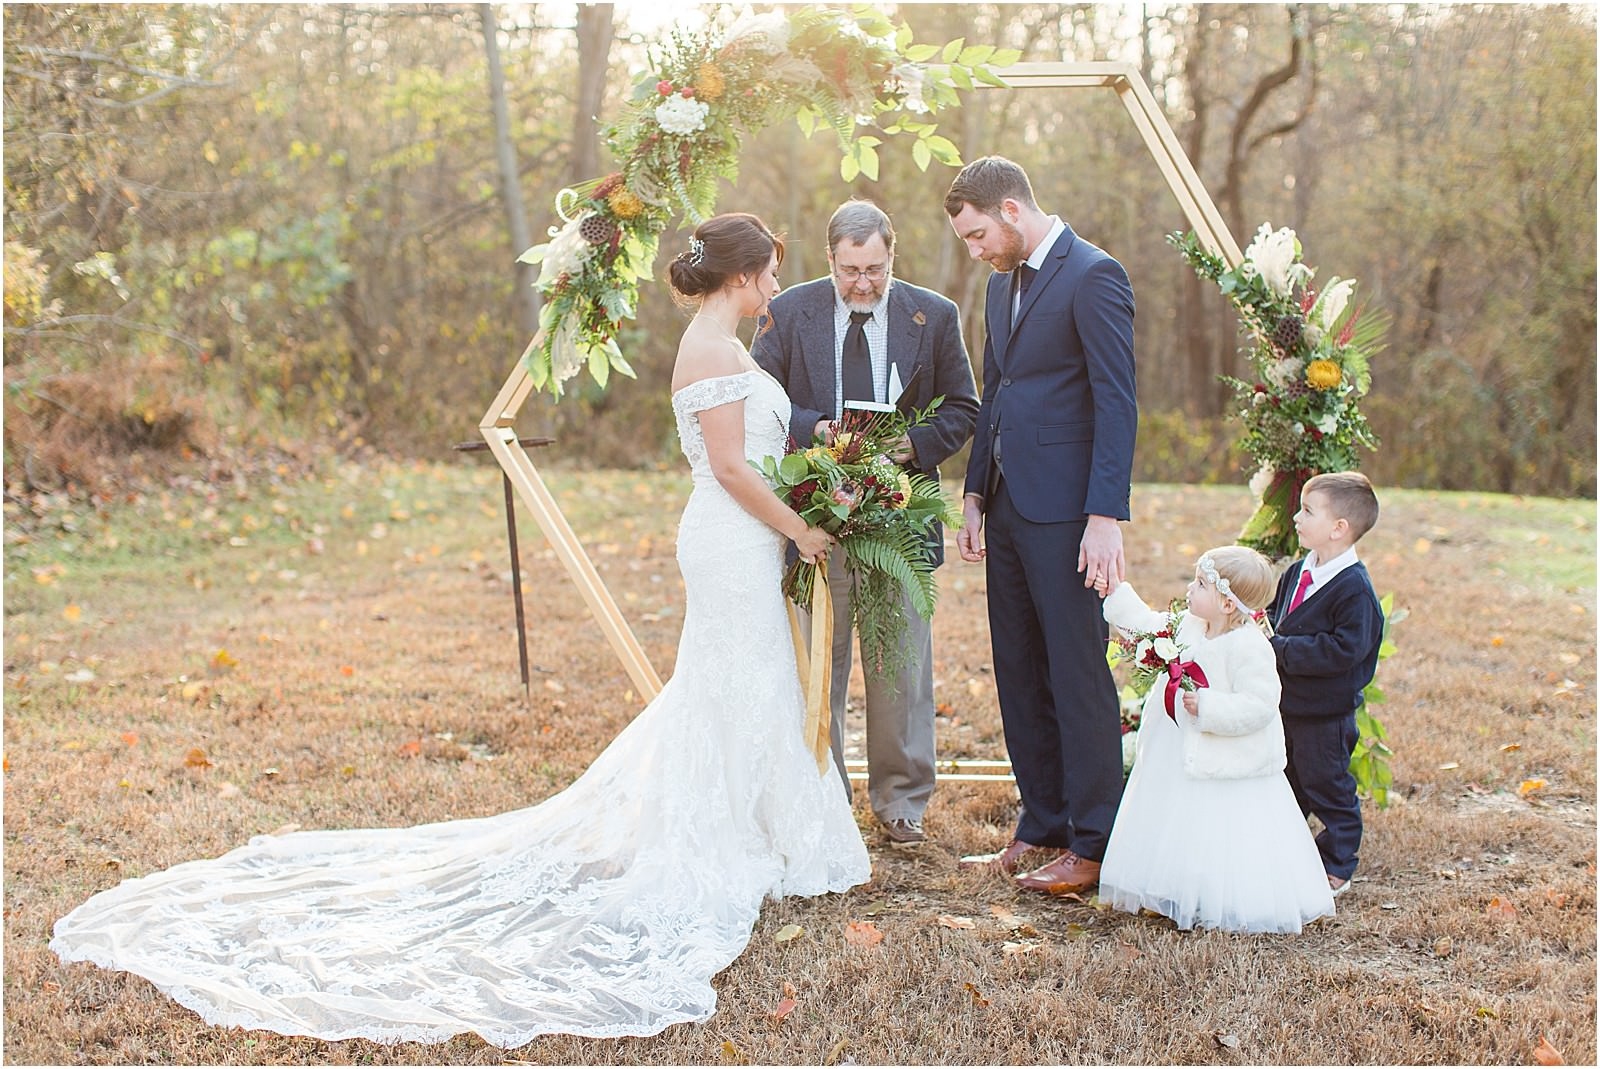 Walker and Alyssa's intimate fall wedding in Southern Indiana. | Wedding Photography | The Corner House Wedding | Southern Indiana Wedding | #fallwedding #intimatewedding | 065.jpg